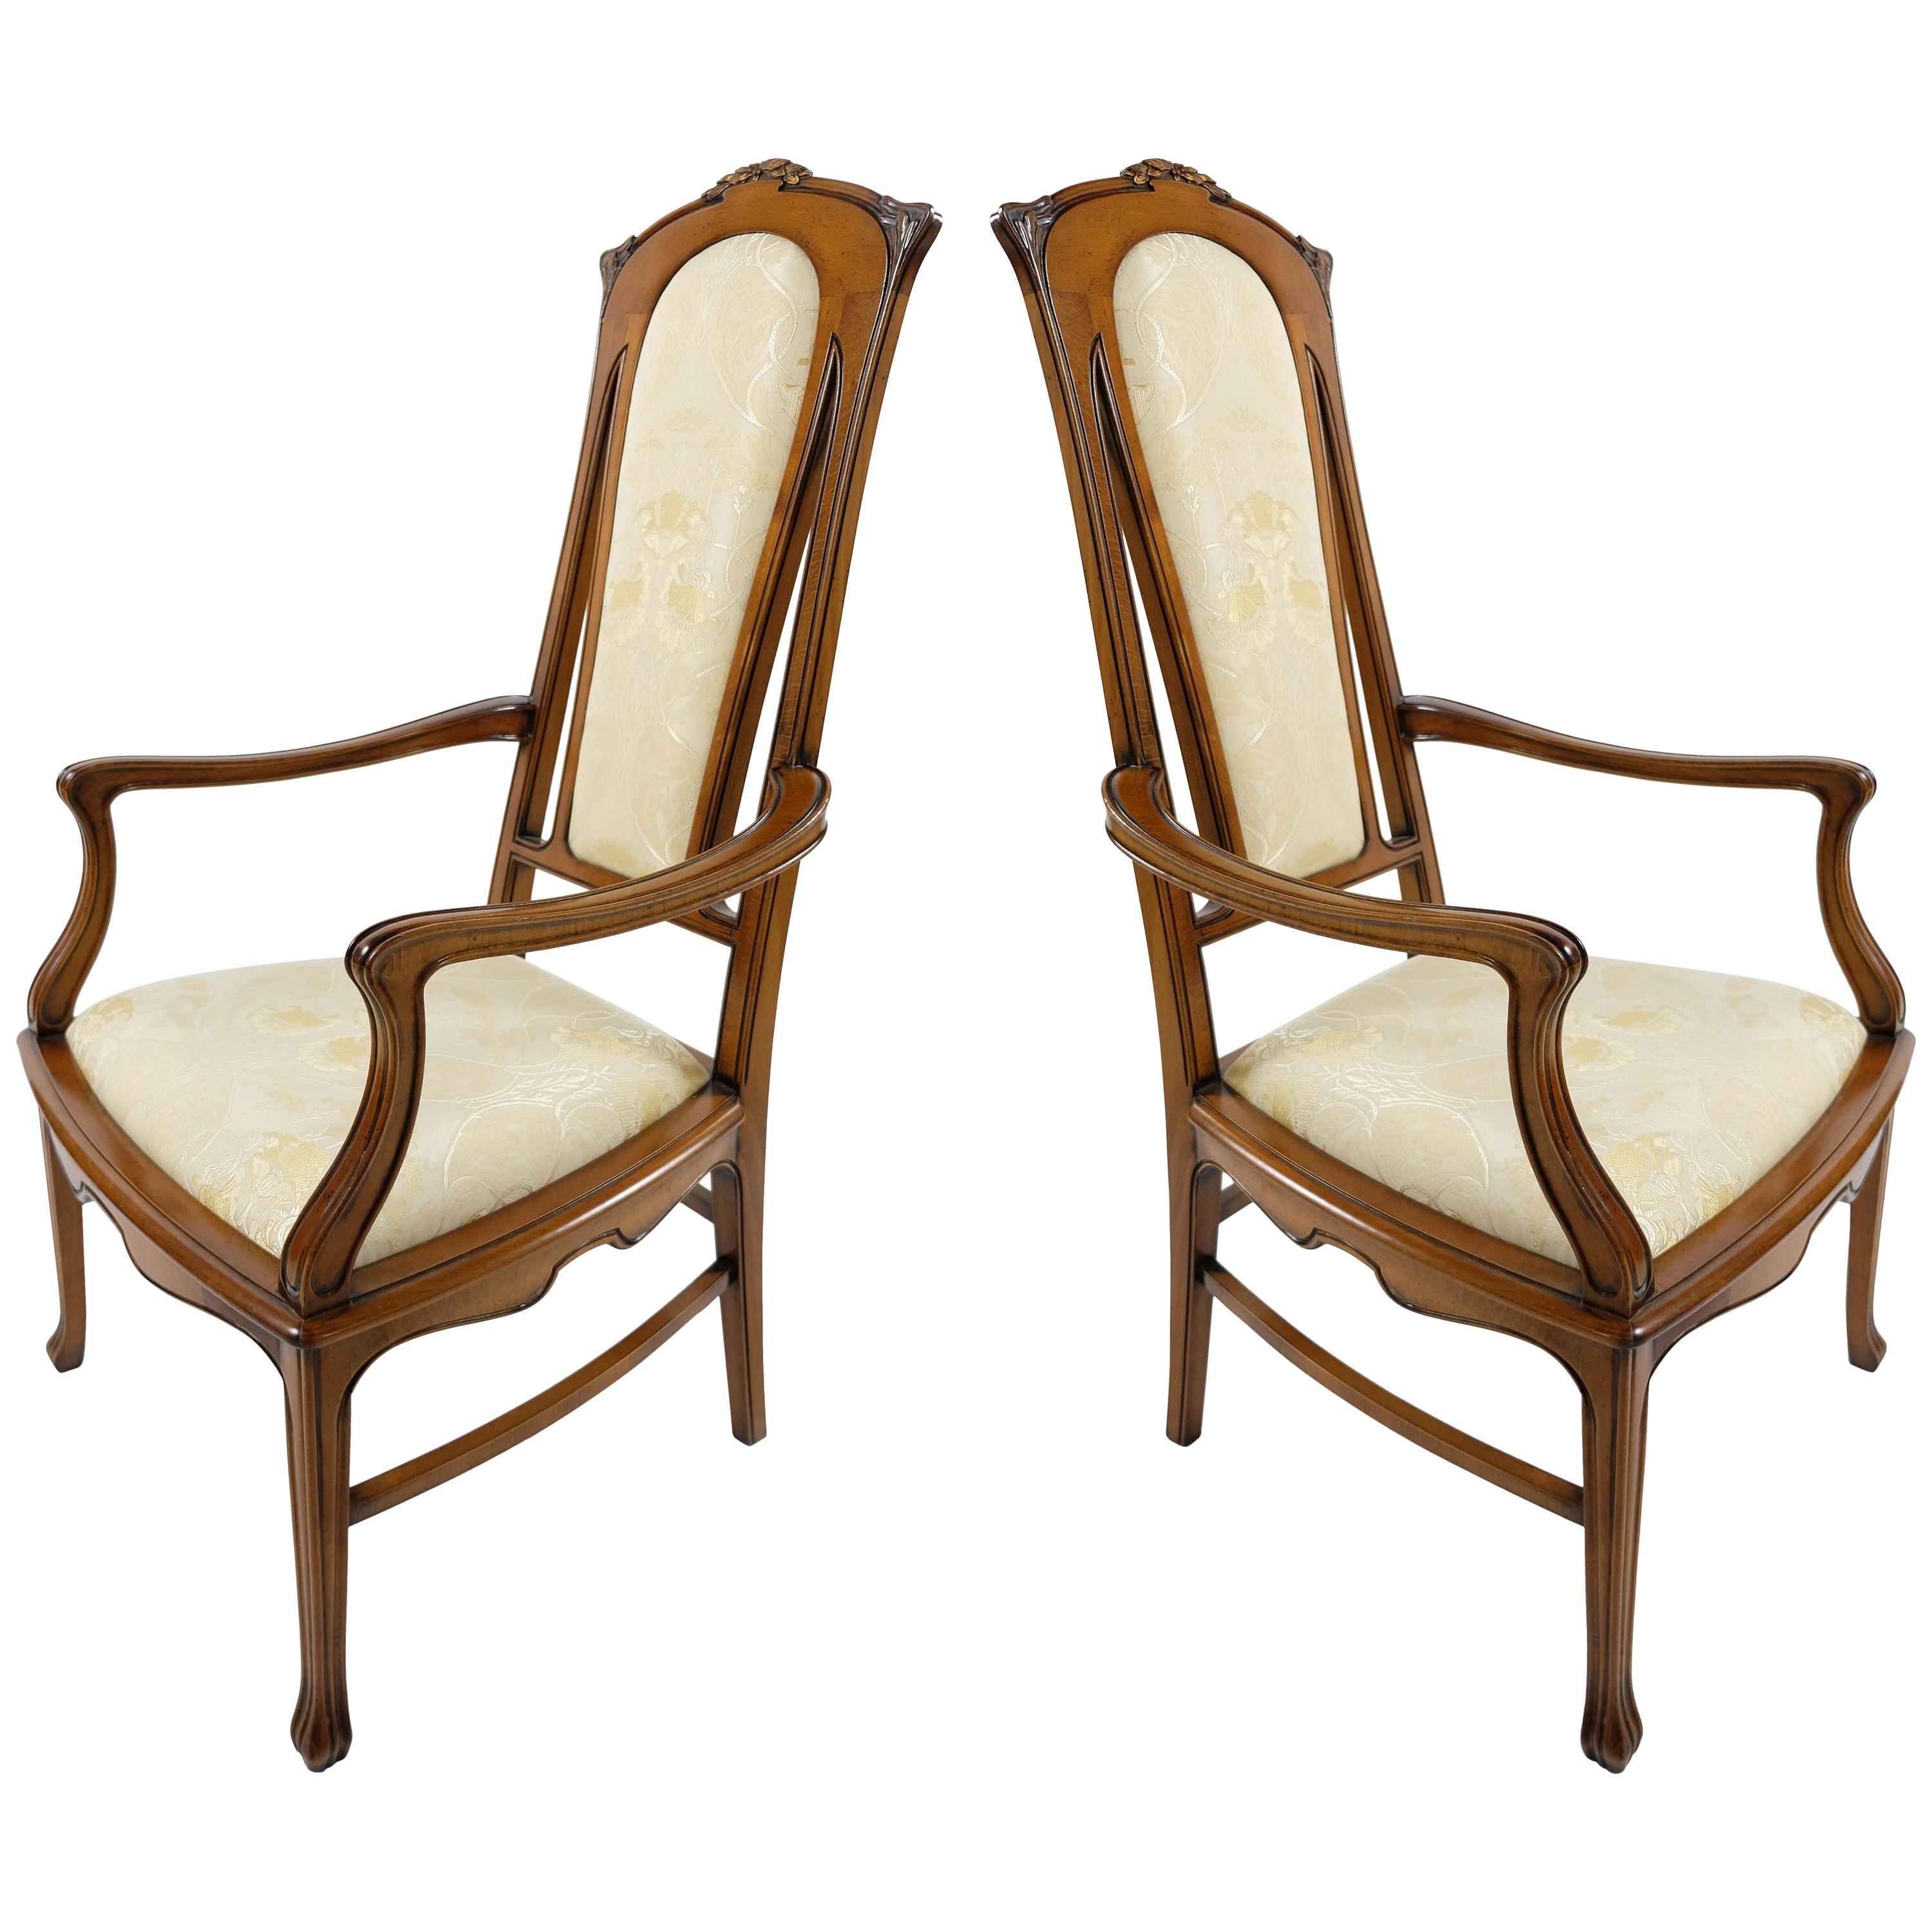  Medea Hand-Carved Art Nouveau Style Armchairs, Pair